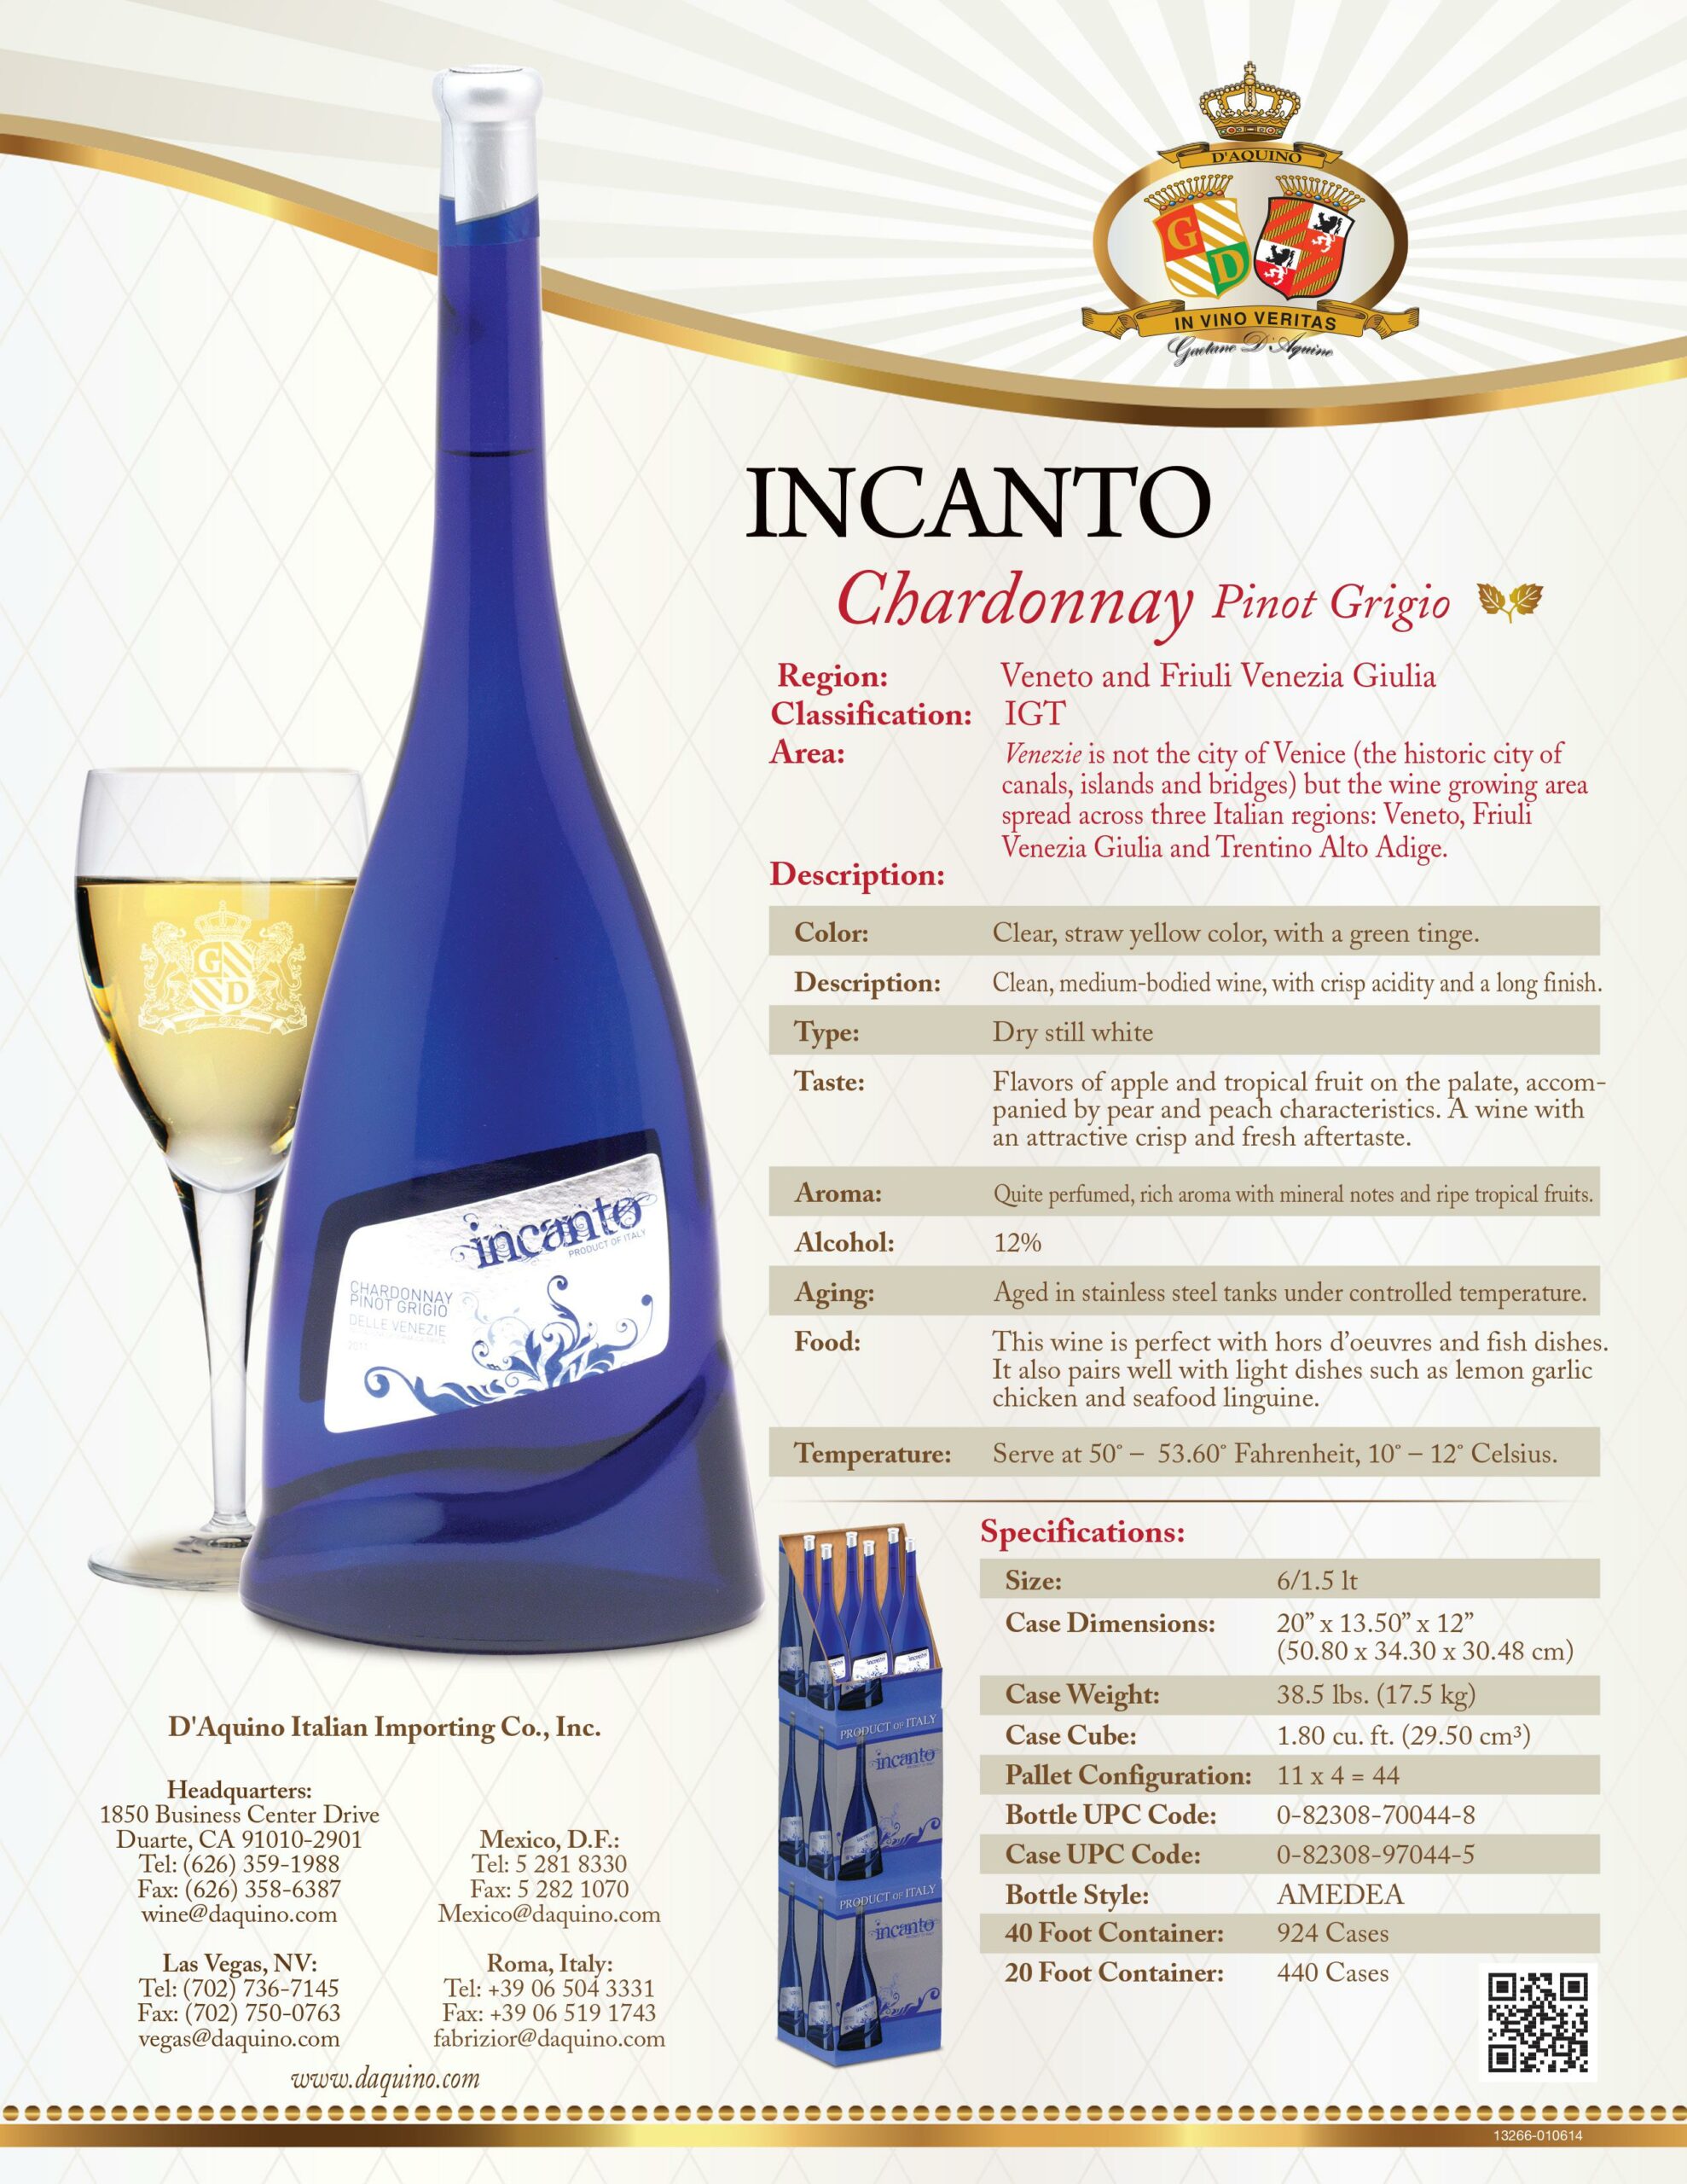 Incanto Chardonnay Pinot Grigio Spec Sheet